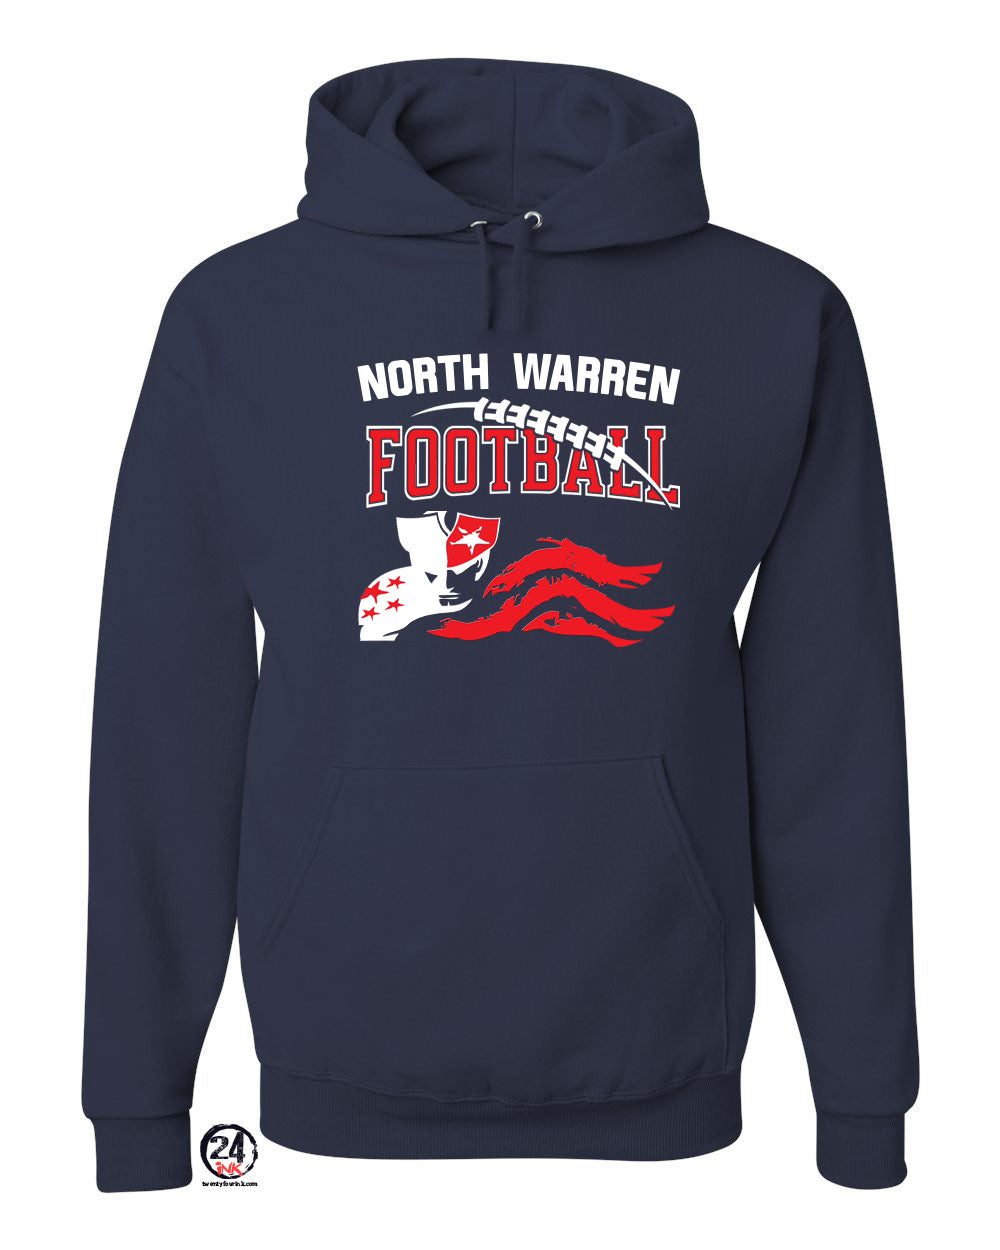 NW Football Design 6 Hooded Sweatshirt